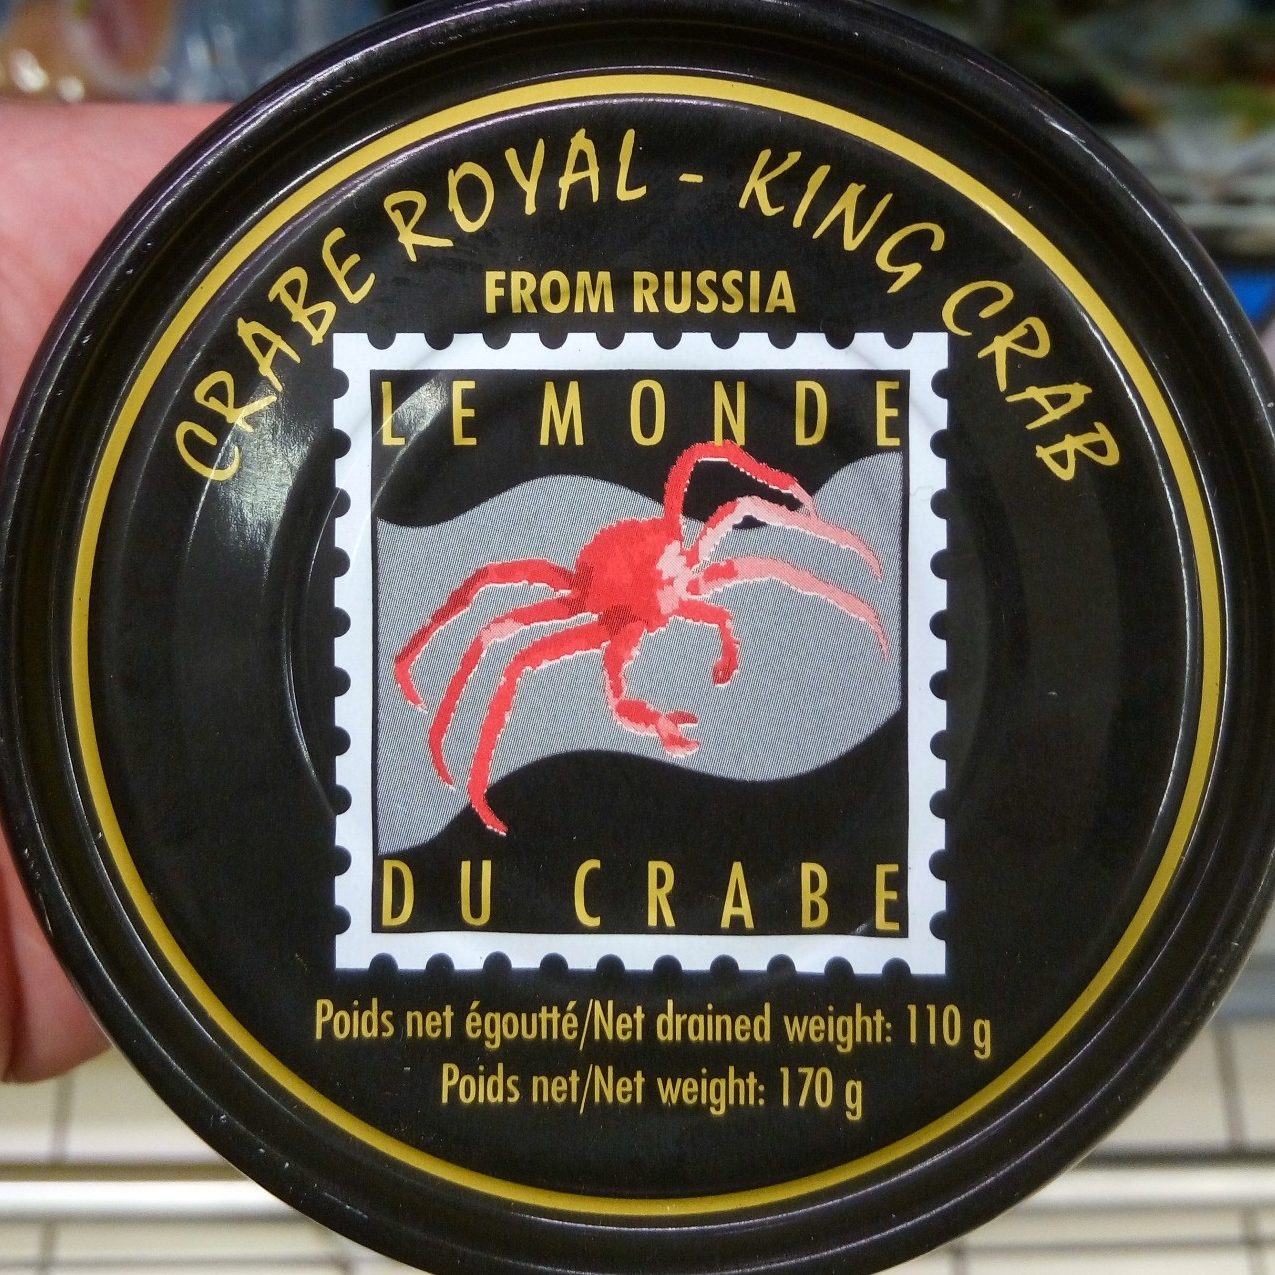 Crabe royal - Produit